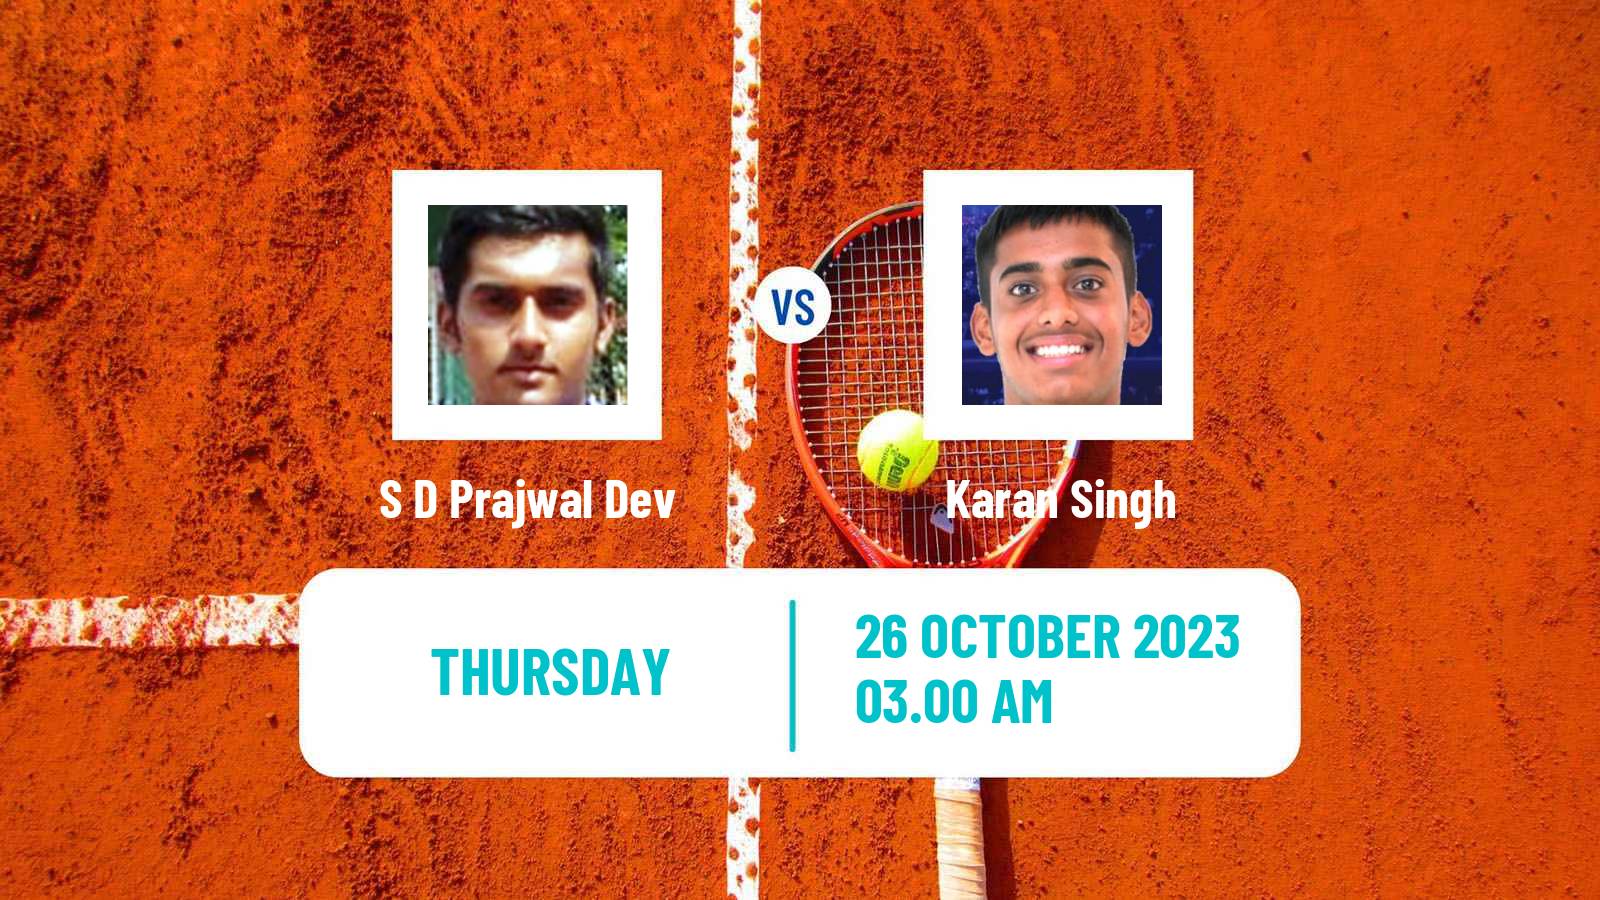 Tennis ITF M15 Davangere Men S D Prajwal Dev - Karan Singh